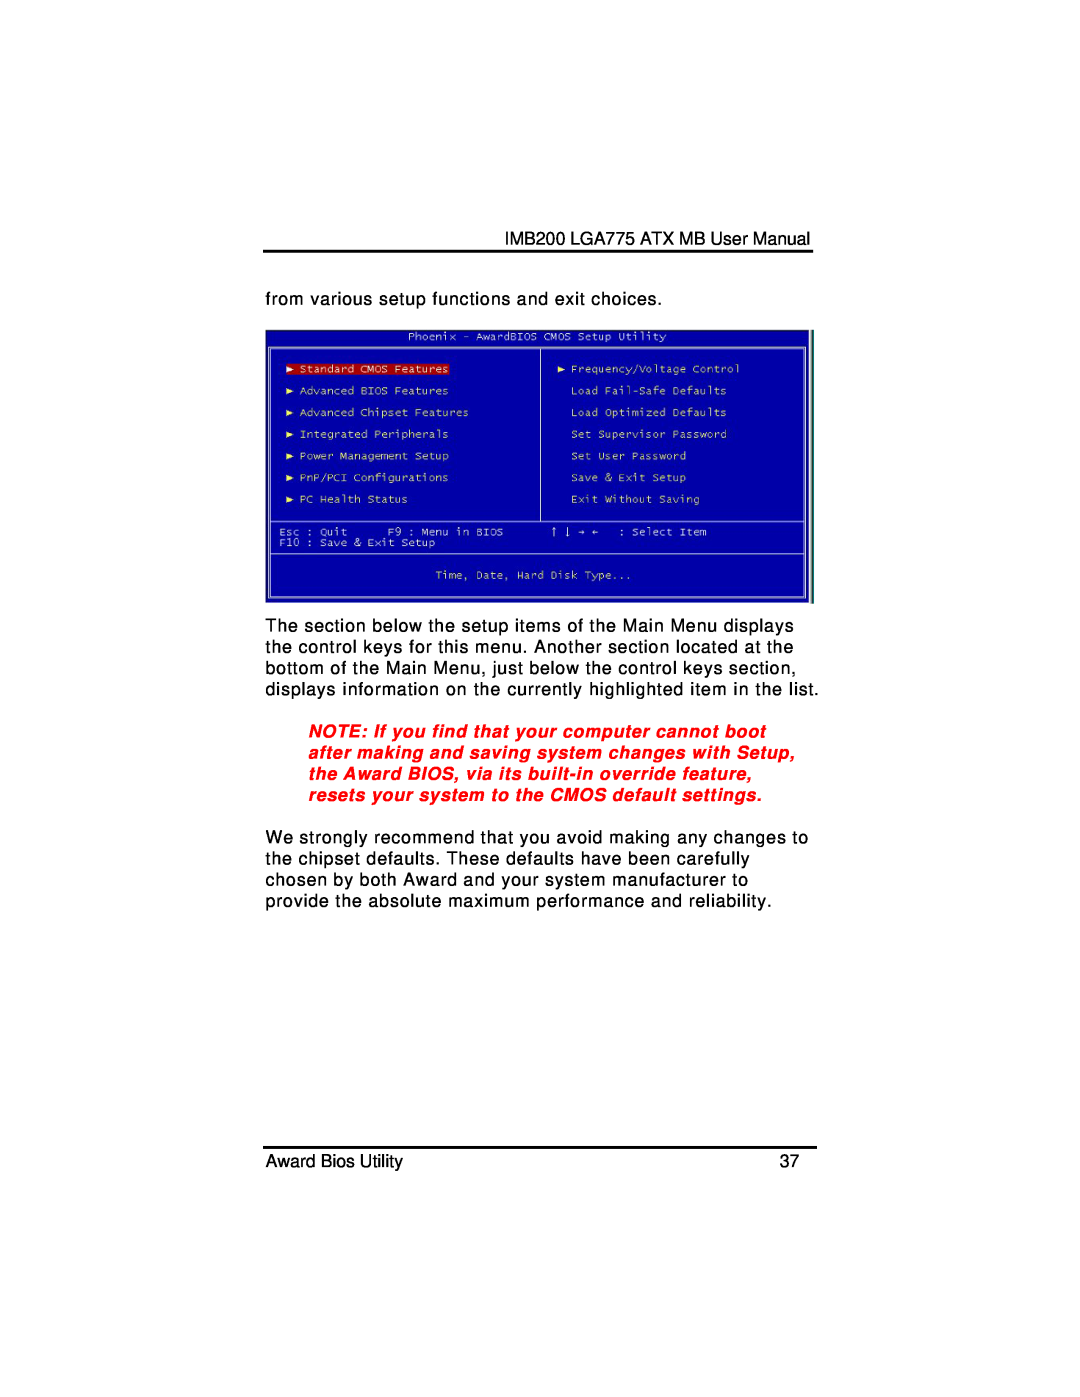 Intel IMB200VGE user manual 